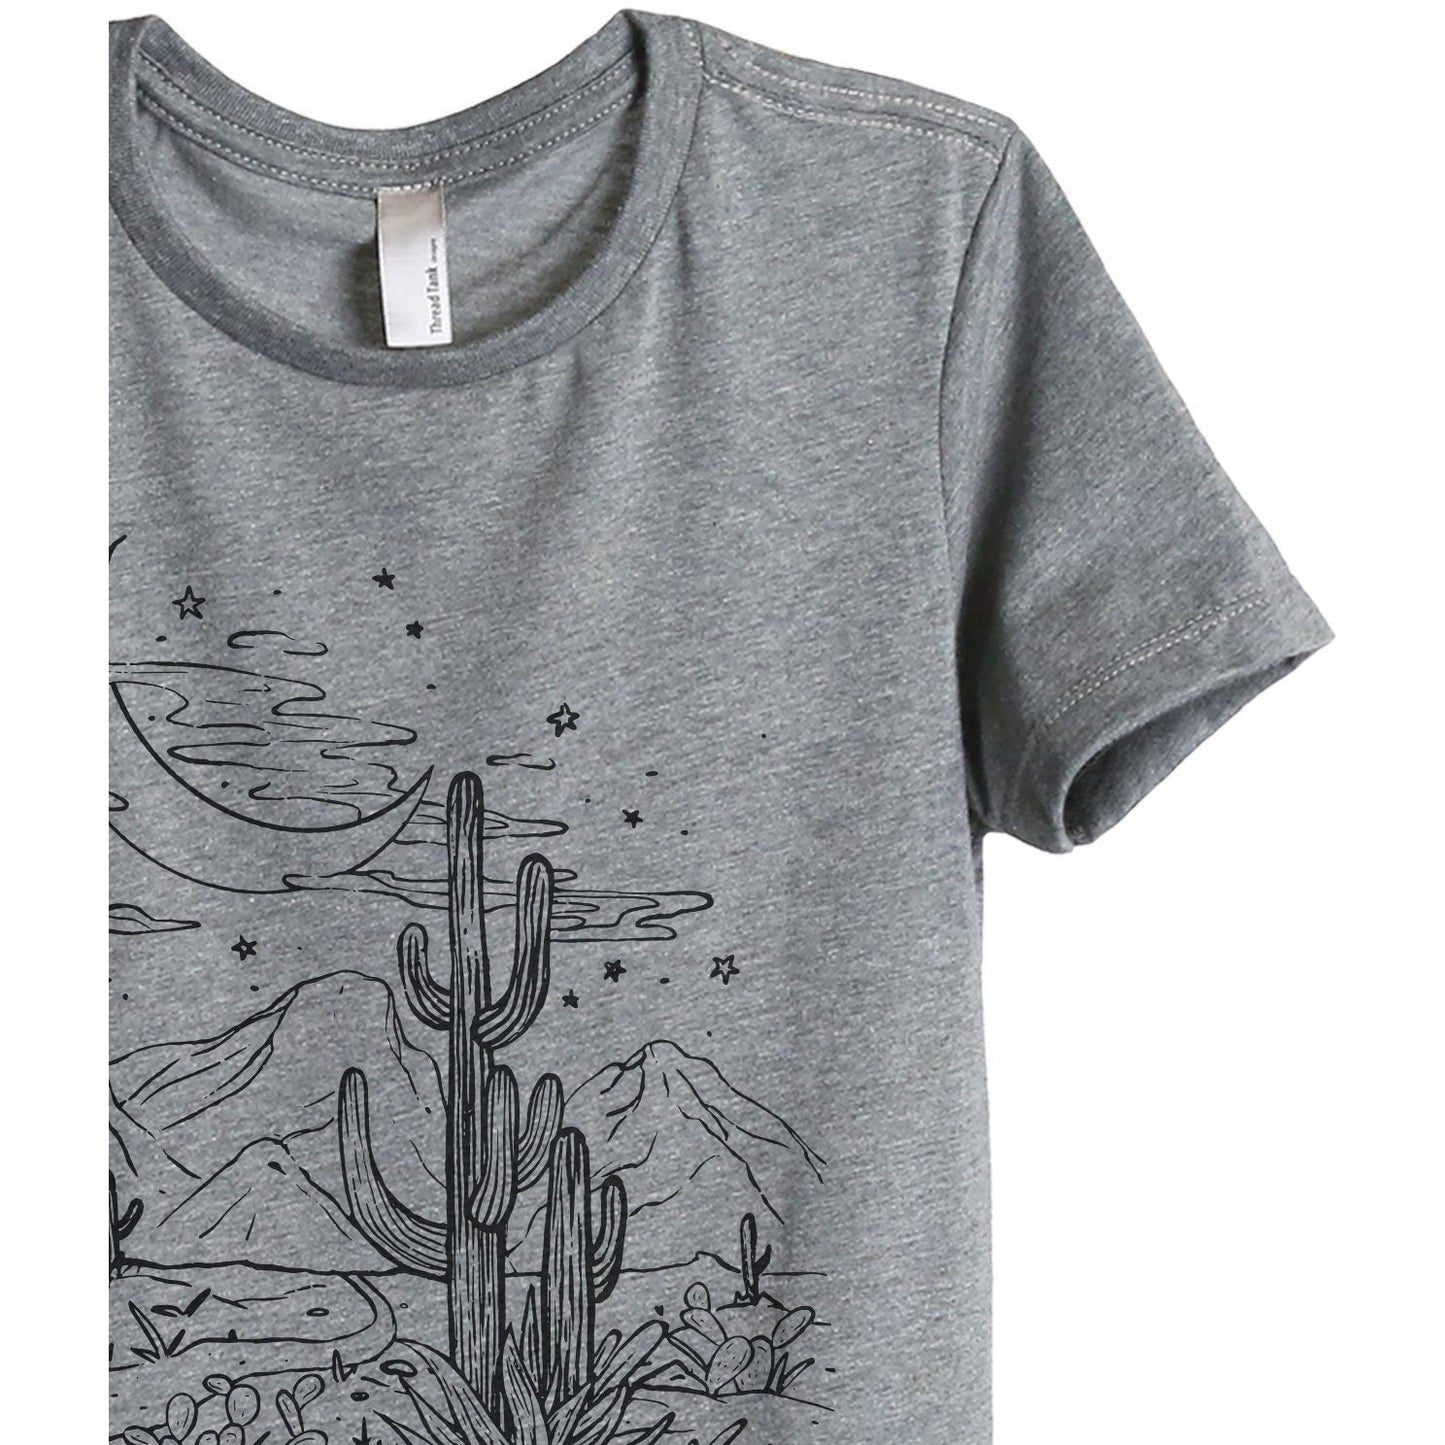 Desert Dreams Women's Relaxed Crewneck T-Shirt Top Tee Heather Grey Zoom Details
